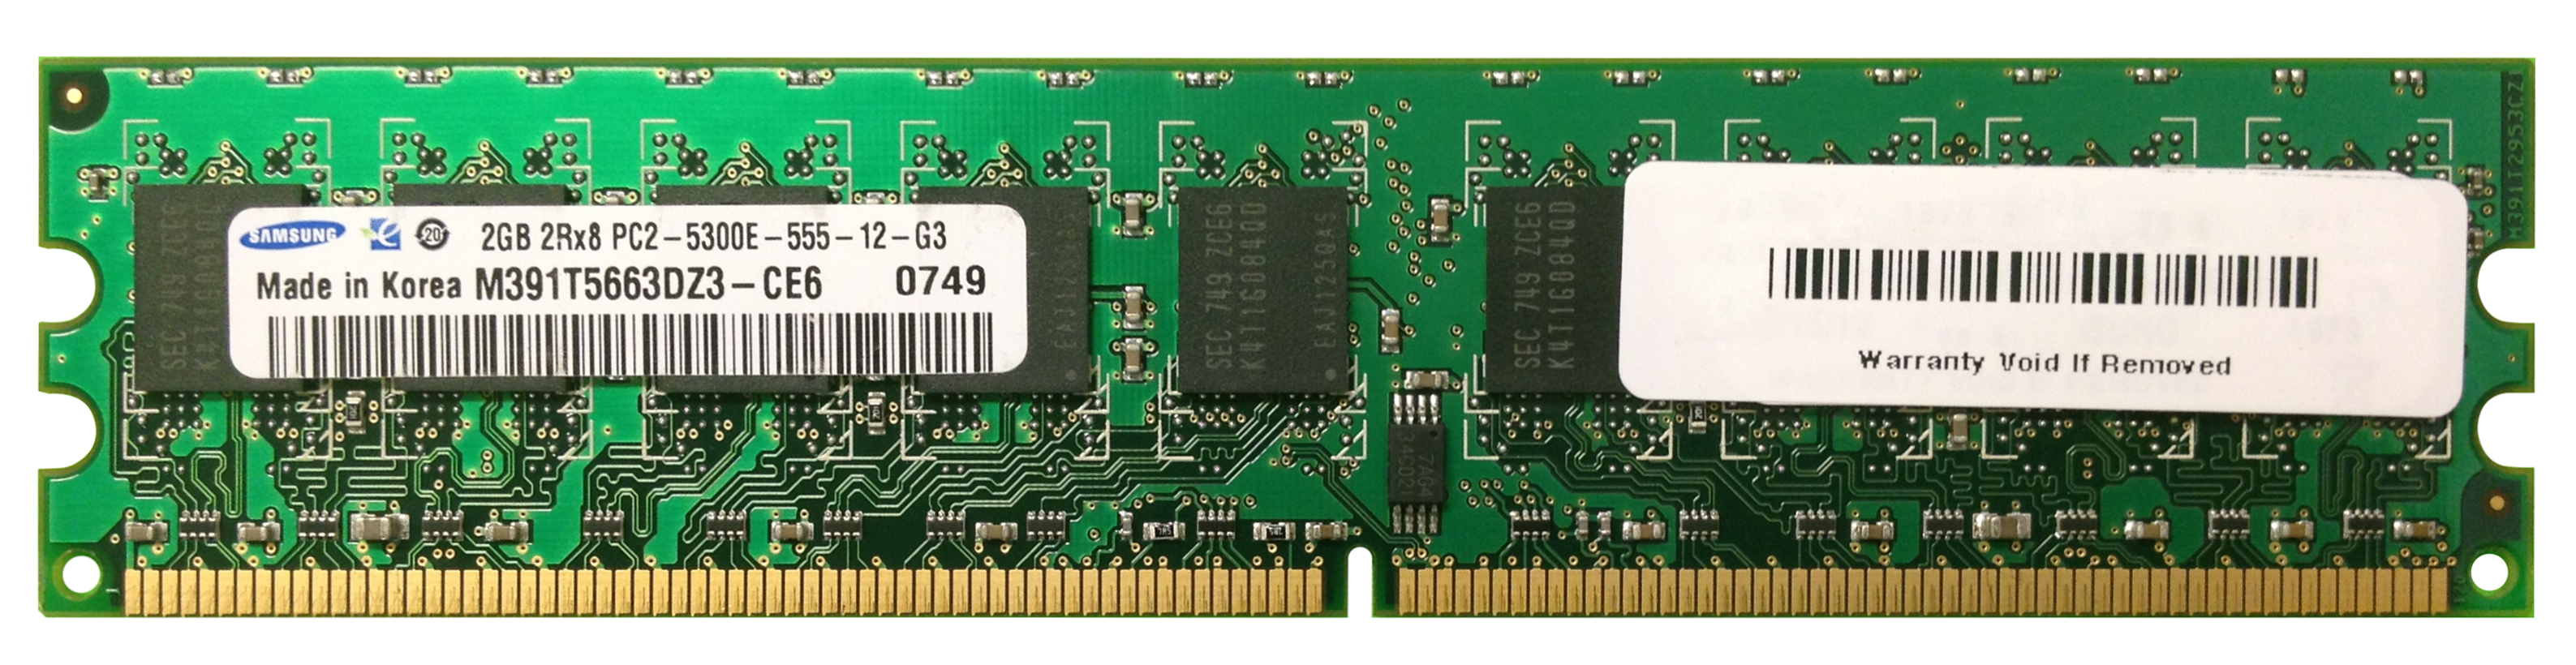 3D-13D277N722391-2G 2GB Module DDR2 PC2-5300 CL=5 ECC Unbuffered DDR2-667 1.8V 256Meg x 72 for SuperMicro PDSMA-E Motherboard n/a